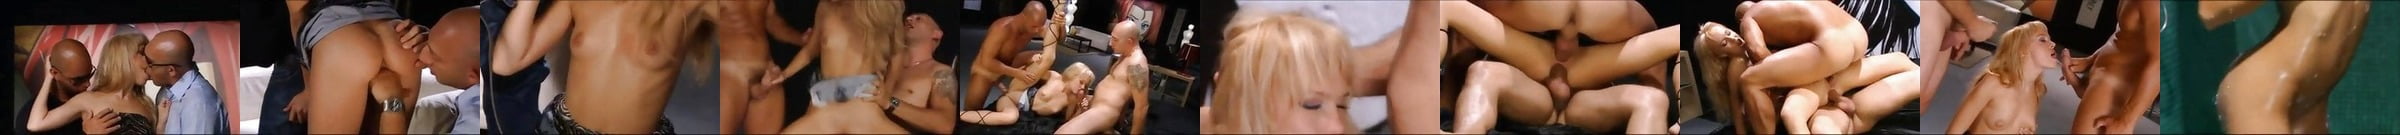 Featured Blue Angel Lesbian Porn Videos 3 Xhamster